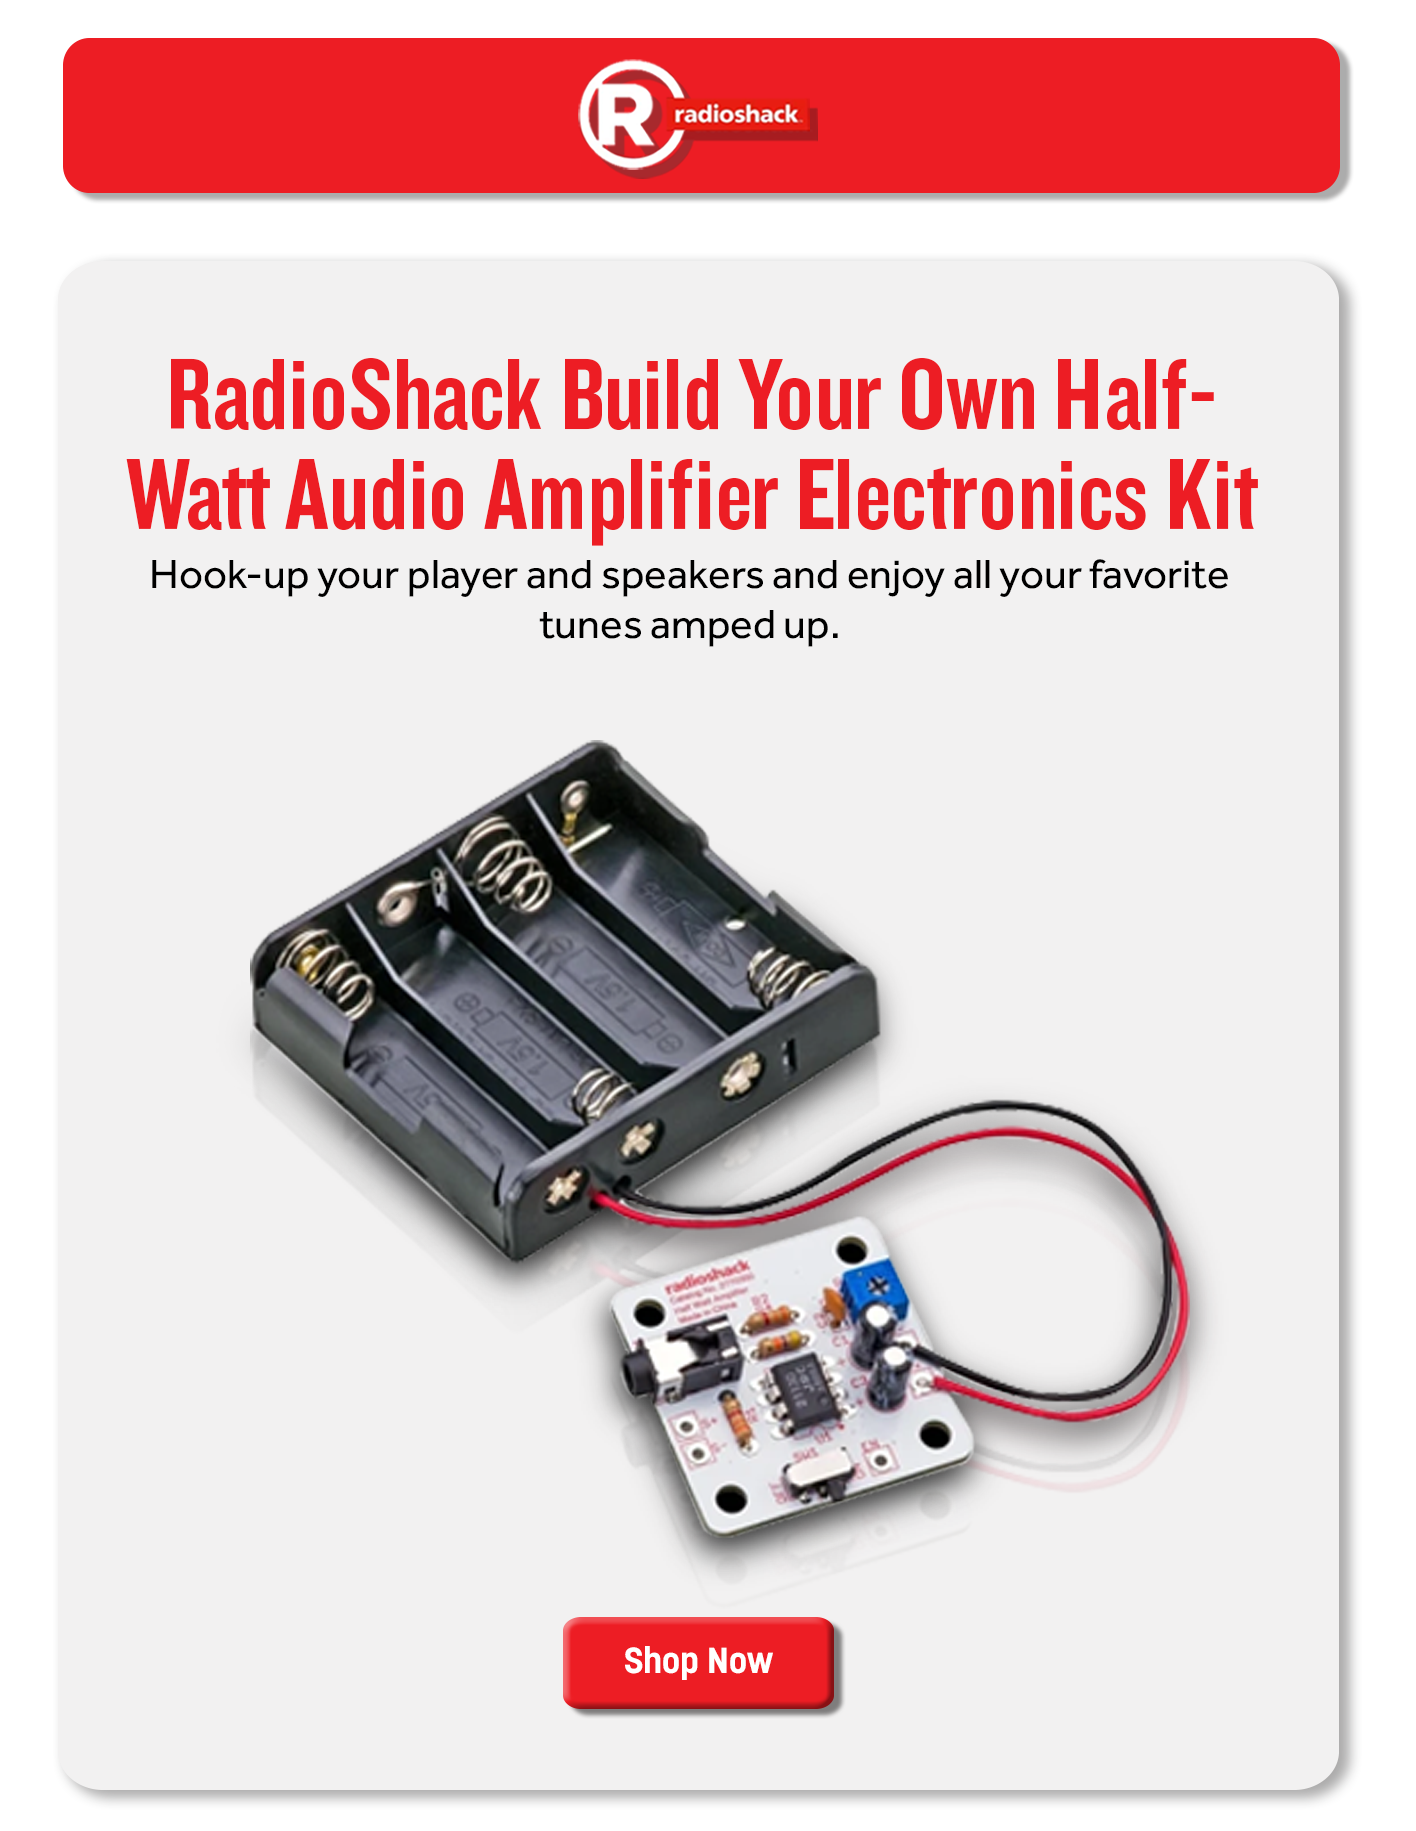 RadioShack Build Your Own Half-Watt Audio Amplifier Electronics Kit